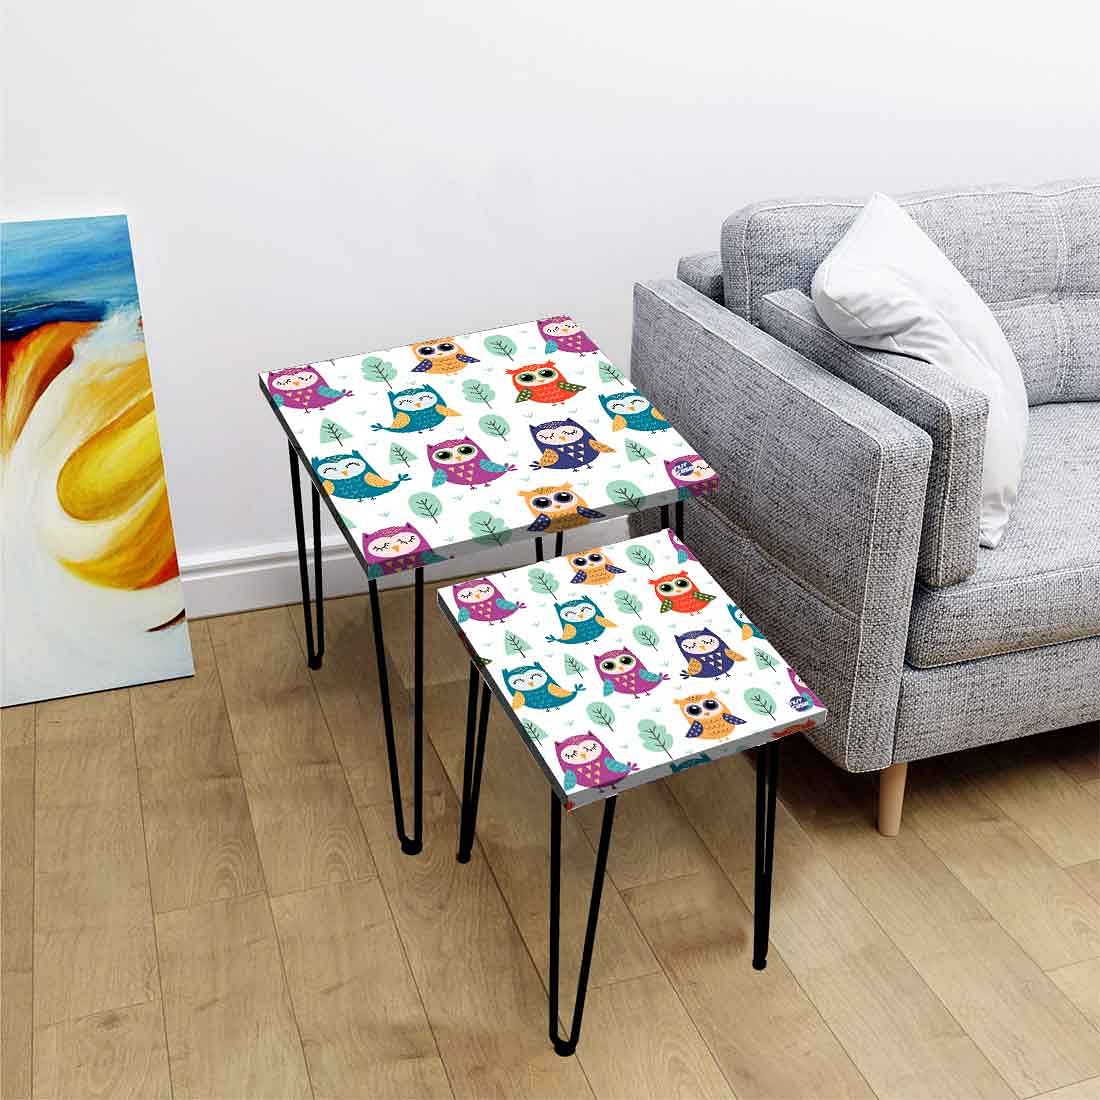 Nesting Side Table Set of 2 for Living Room Home Decor - Cute Owl Nutcase